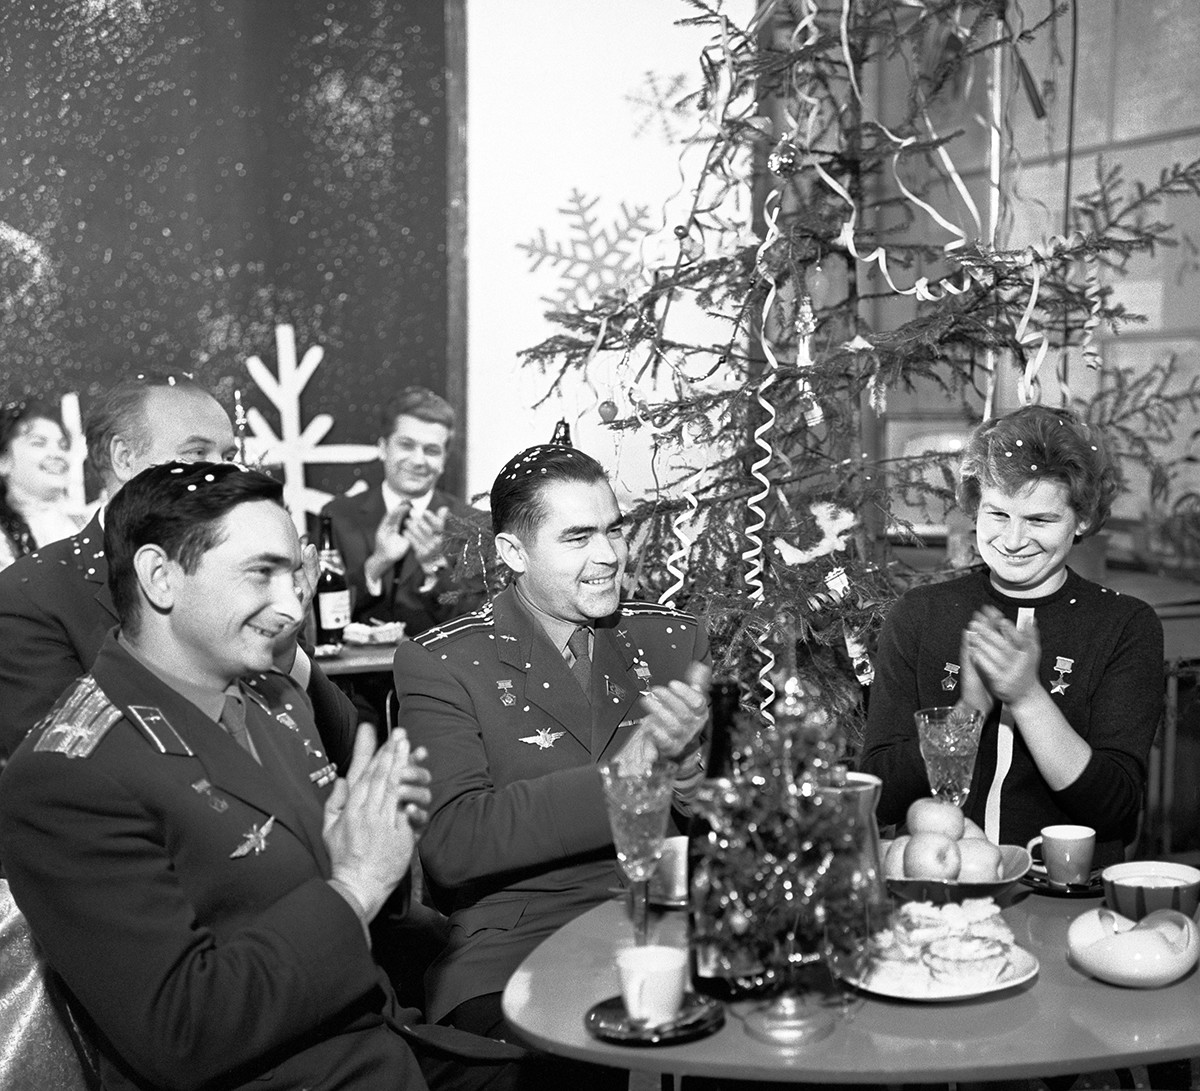 Les cosmonautes soviétiques Valeri Bykovski, Andrian Nikolaïev et Valentina Terechkova tournent dans l'émission télévisée « Golouboï Ogonek »